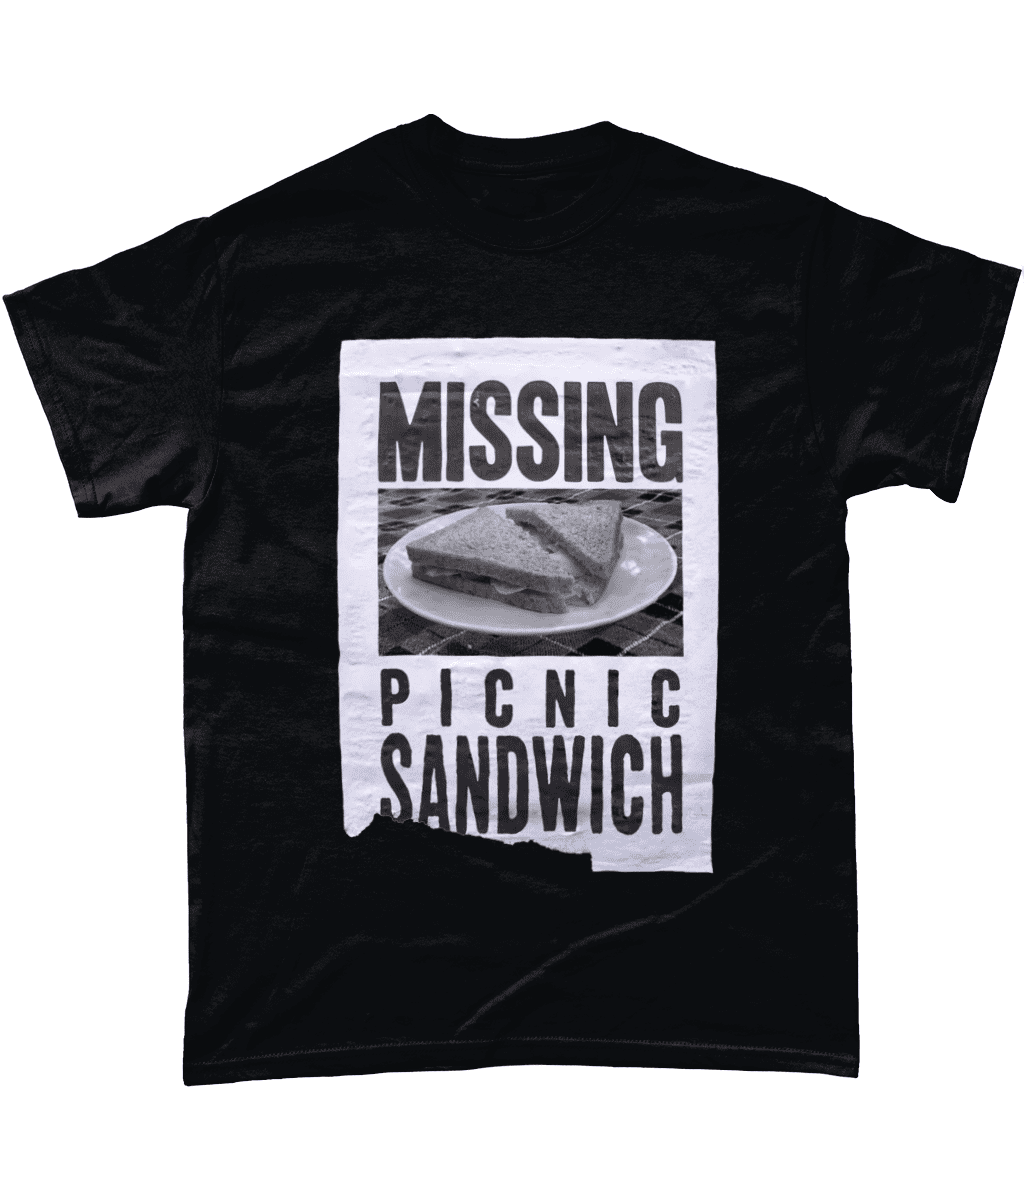 Sandwich Short of a Picnic T-Shirt Black